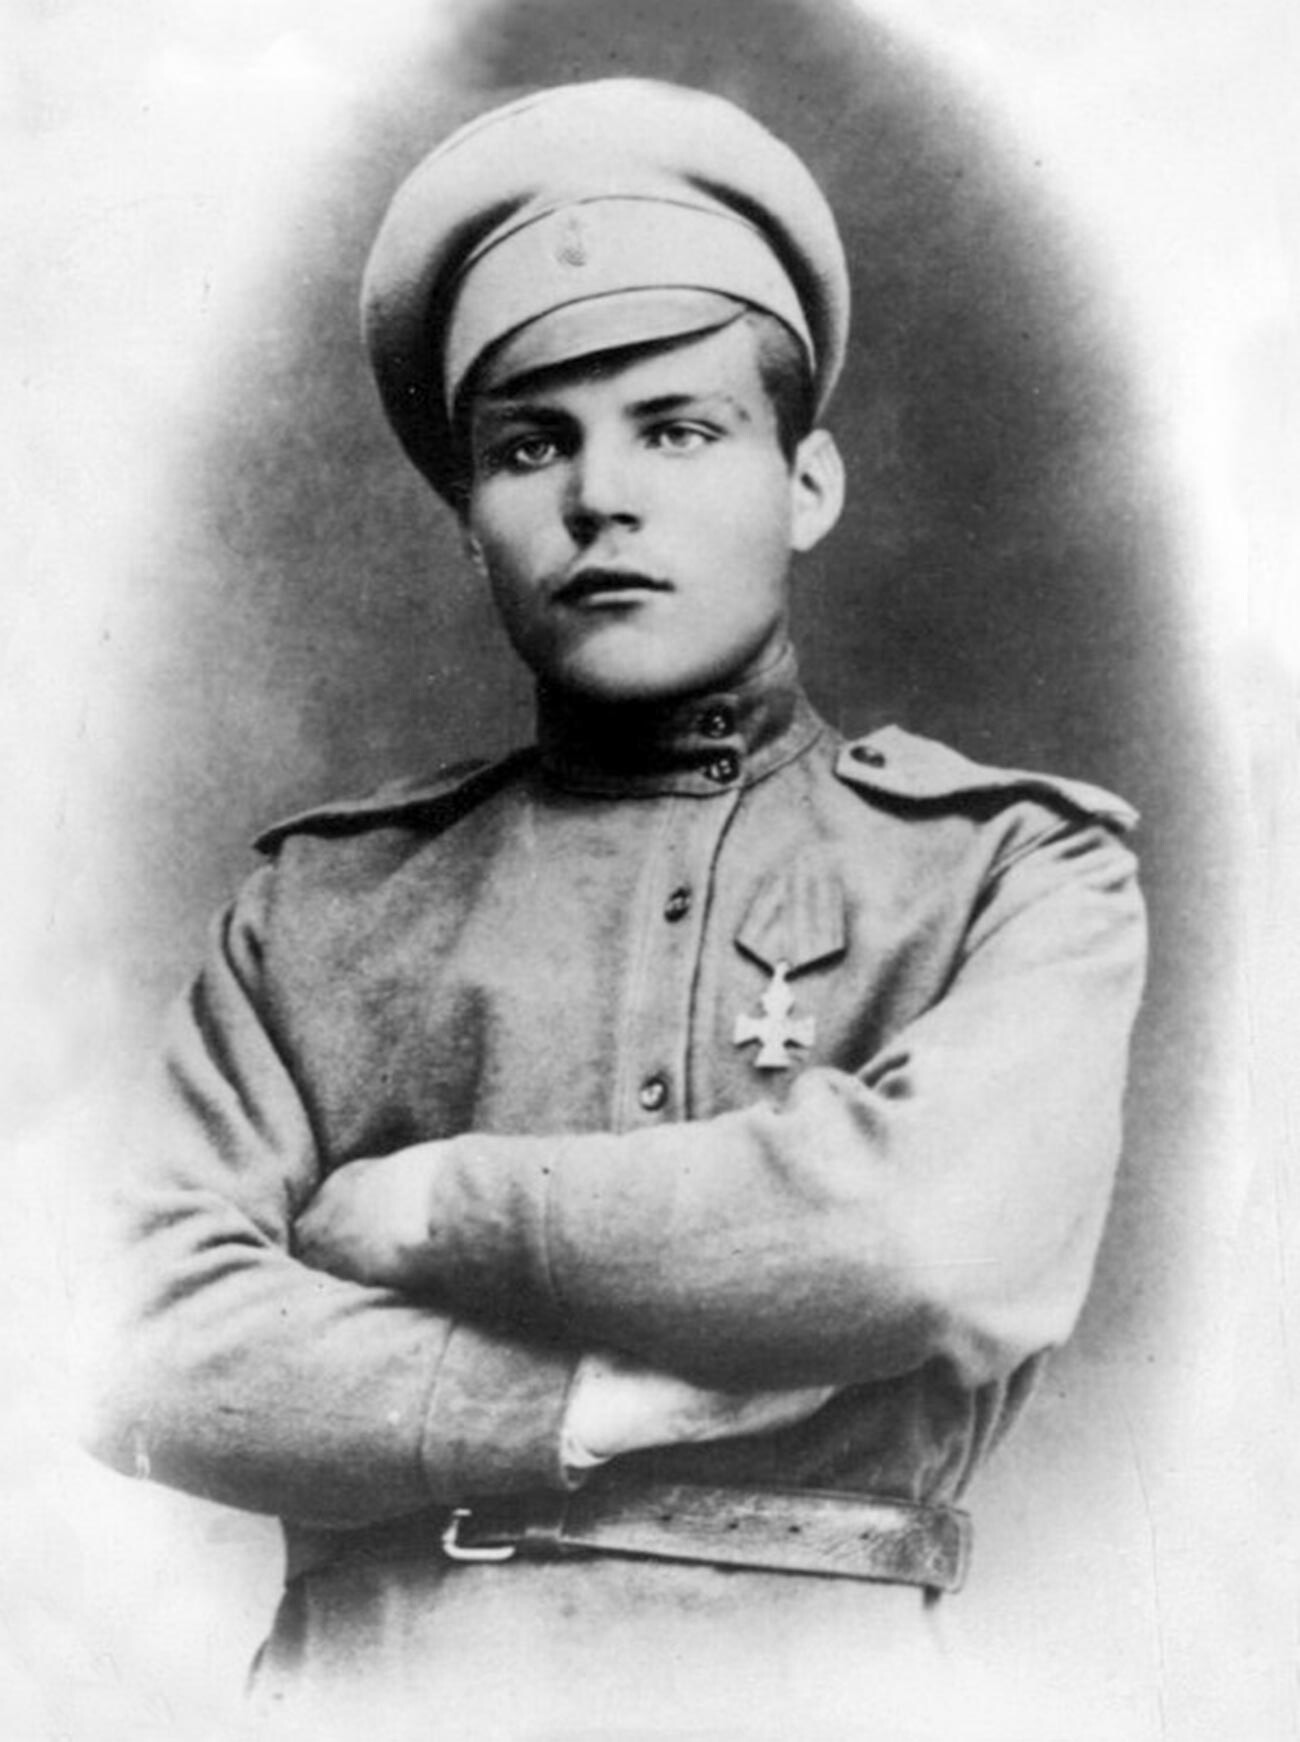 Rodion Malinovsky during WWI.